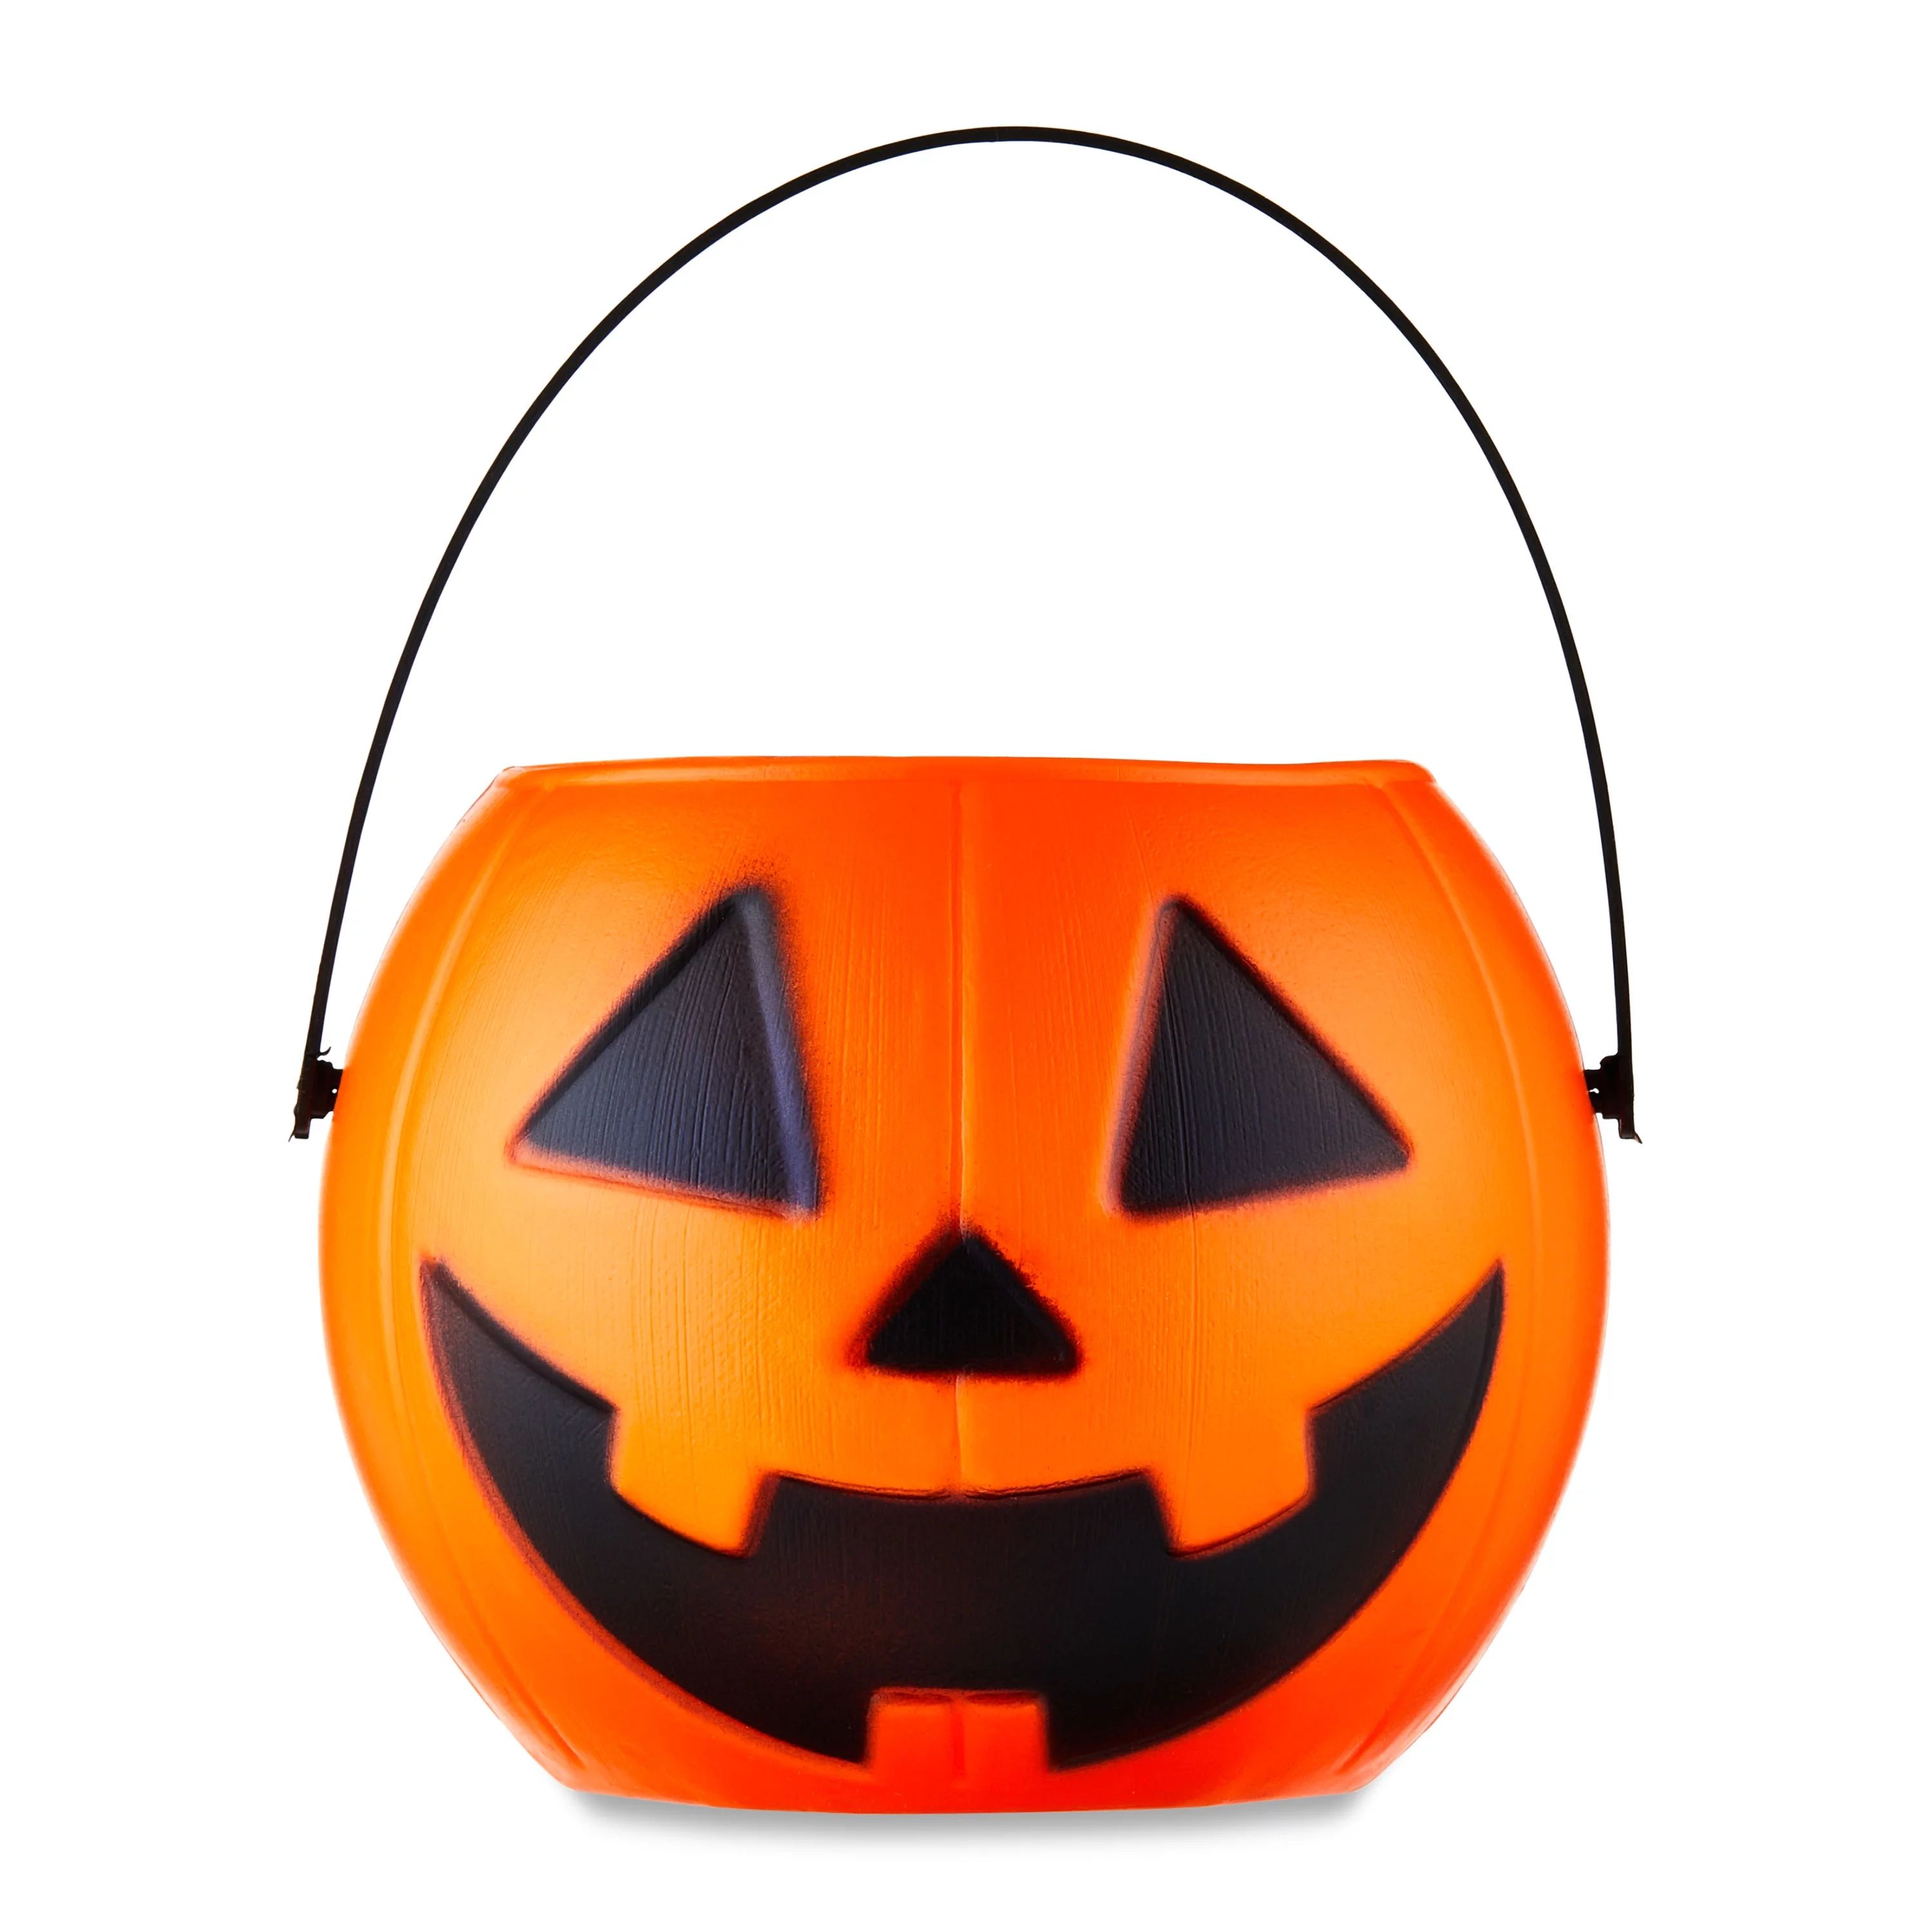 Halloween Mini Orange Pumpkin Pail, Party Favors, Halloween Decorations, by Way to Celebrate | Walmart (US)